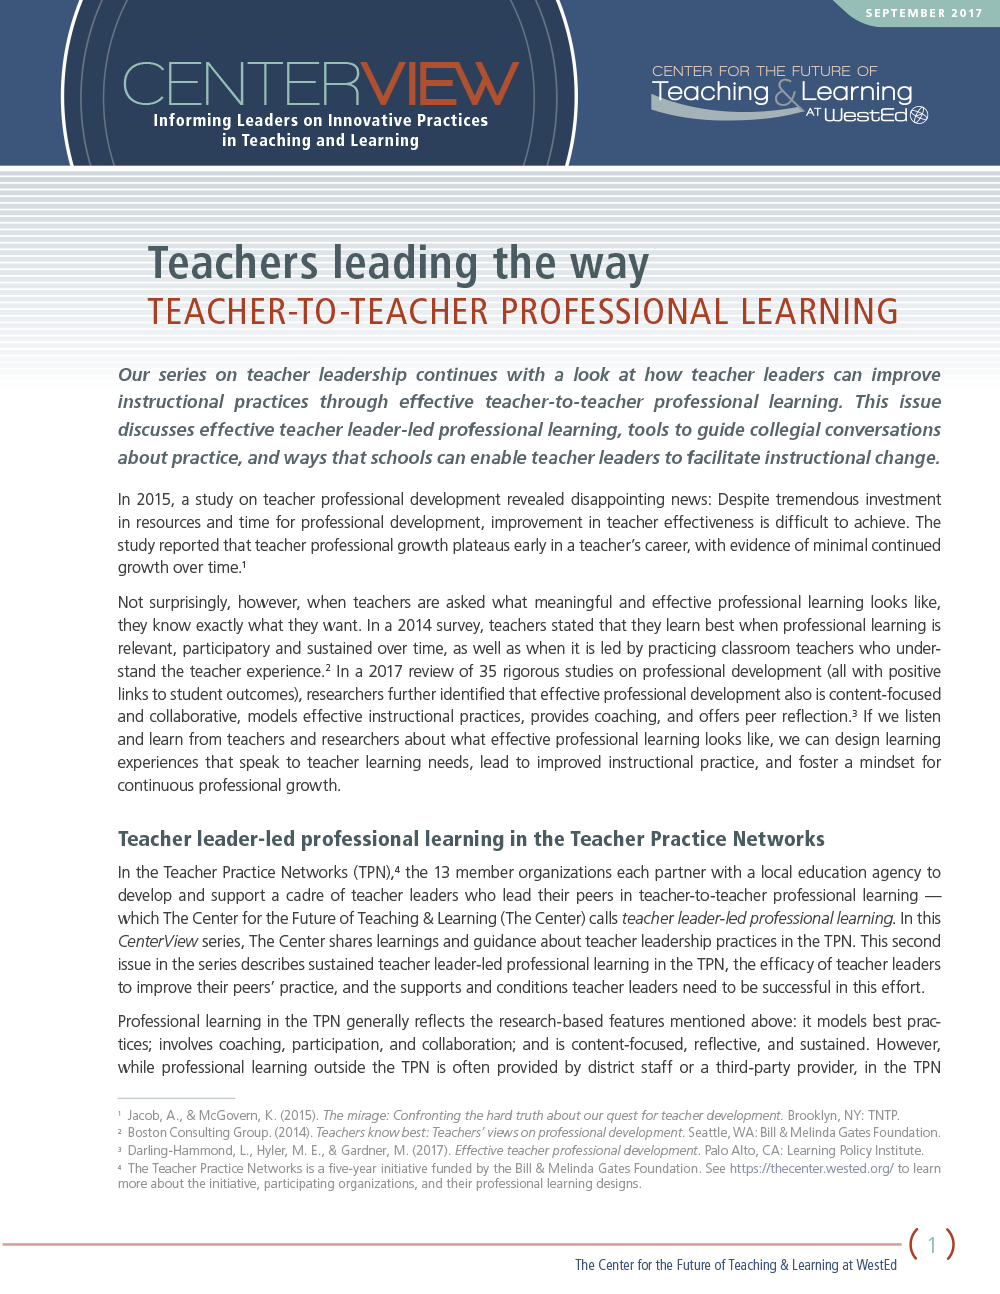 CenterView: Teachers Leading the Way – Teacher-to-Teacher Professional Learning